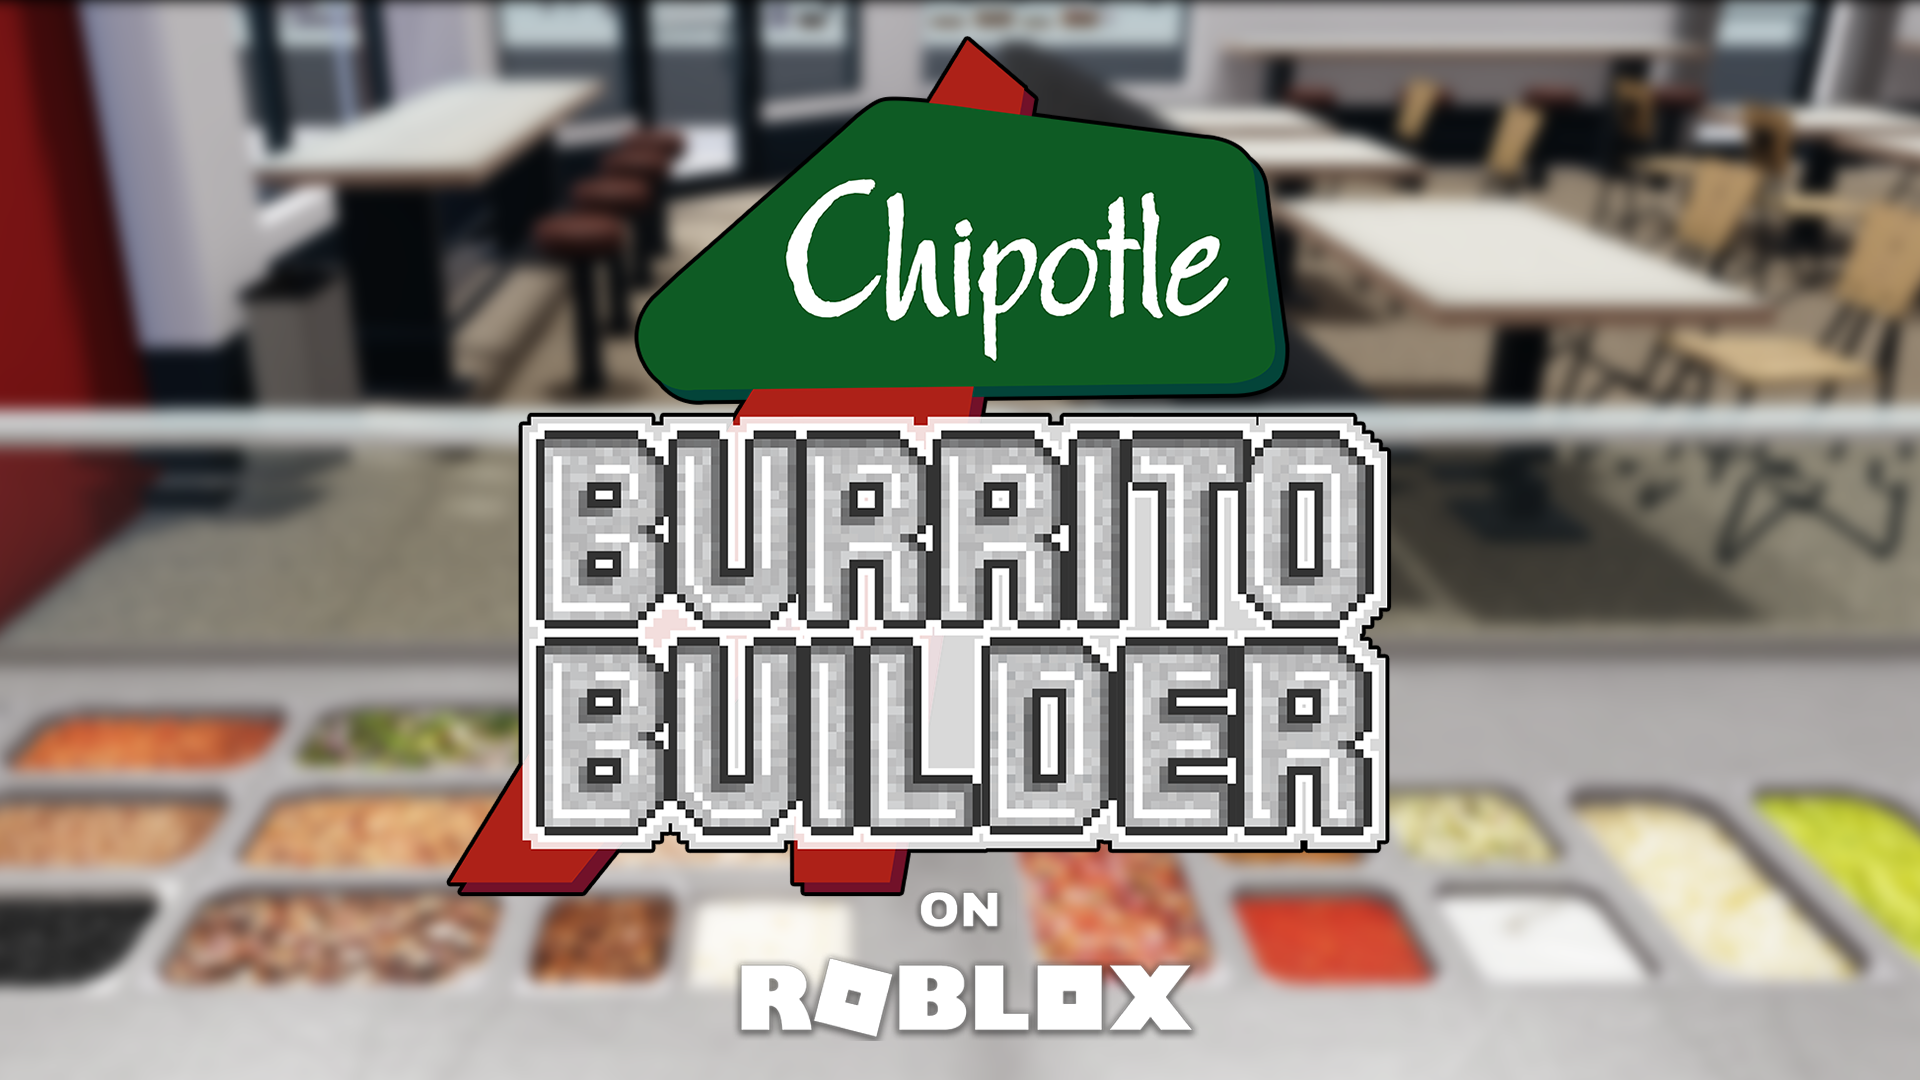 landdistrikterne Solskoldning Oprigtighed Chipotle Burrito Day 2022: Roblox game, free burritos coming Thursday